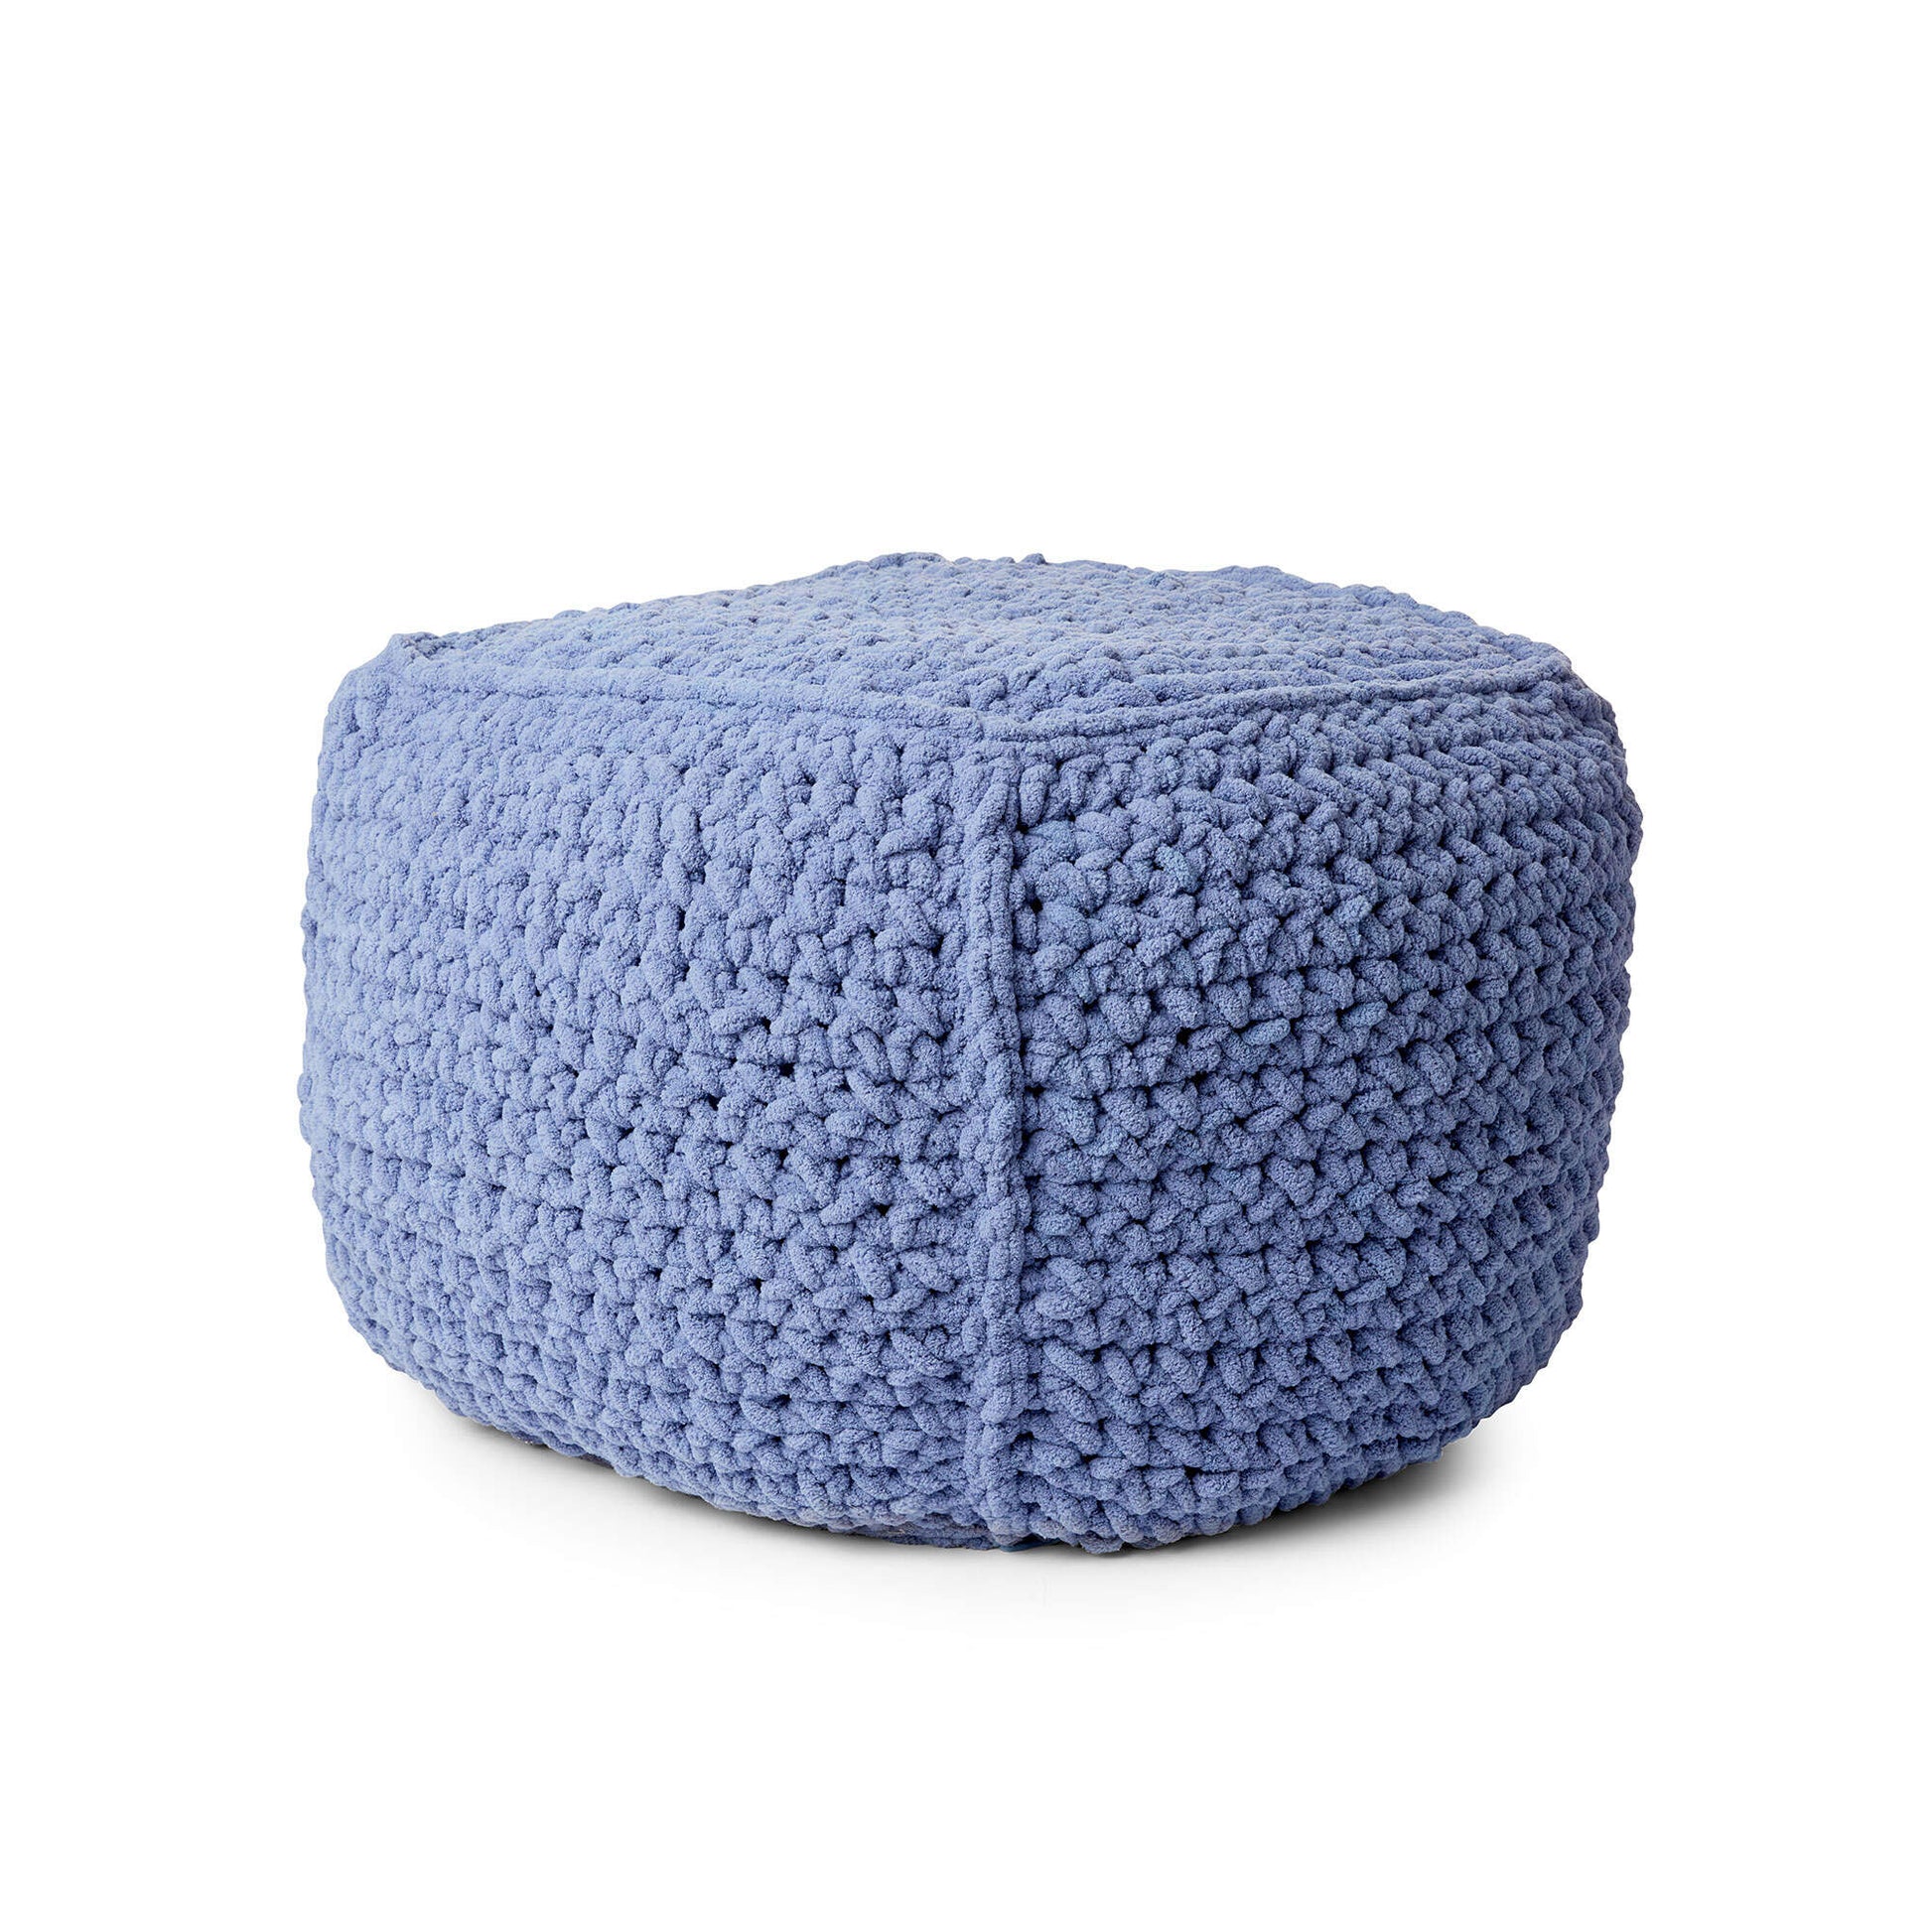 Bernat Crochet Pouf Crochet Pillow made in Bernat Blanket Extra yarn